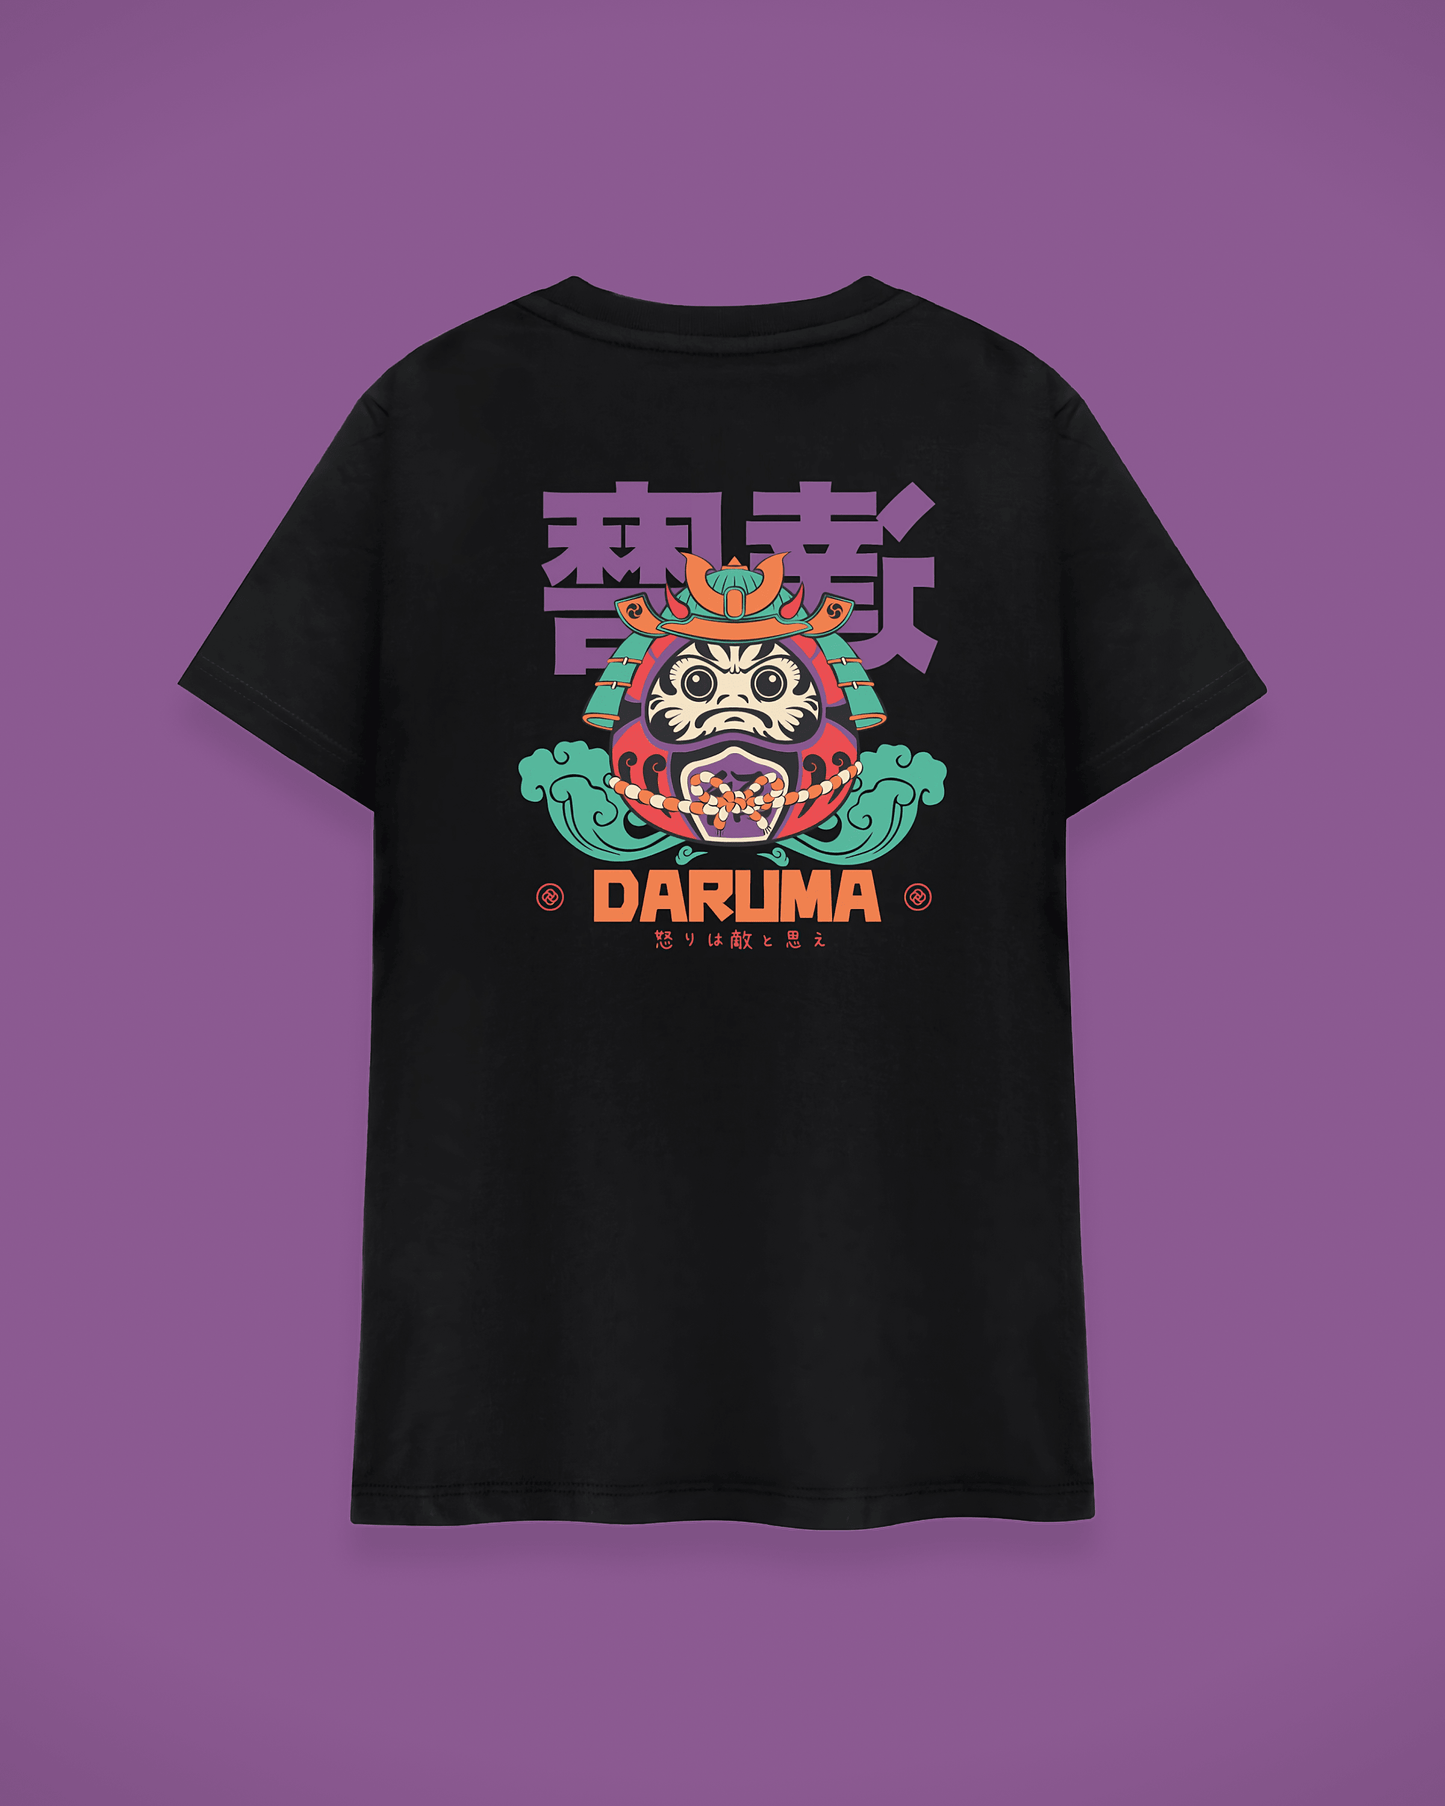 Datclothing - Daruma - oversized T-shirt black - back view